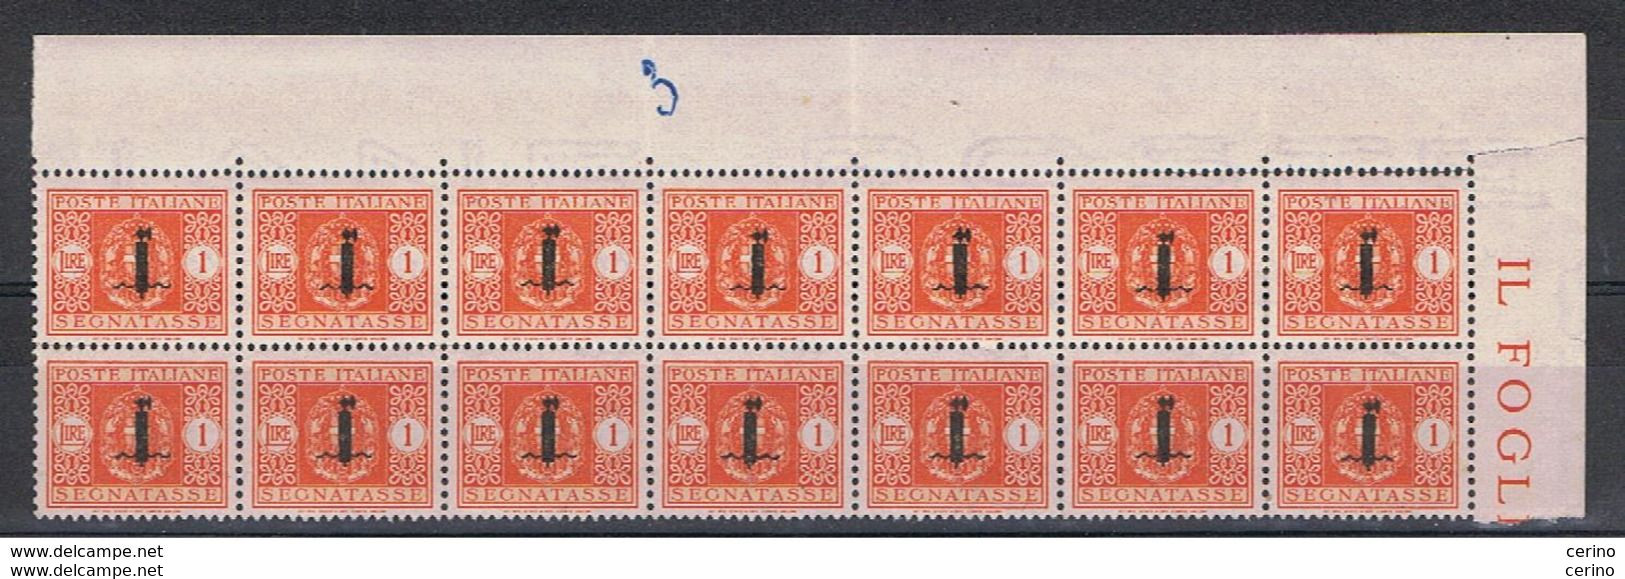 R.S.I.:  1944  TASSE  - £. 1  ARANCIO  BL. 14  N. -  DENTELLATURA  APERTA  IN  ALTO  A  DX. -   SASS. 68 - Taxe